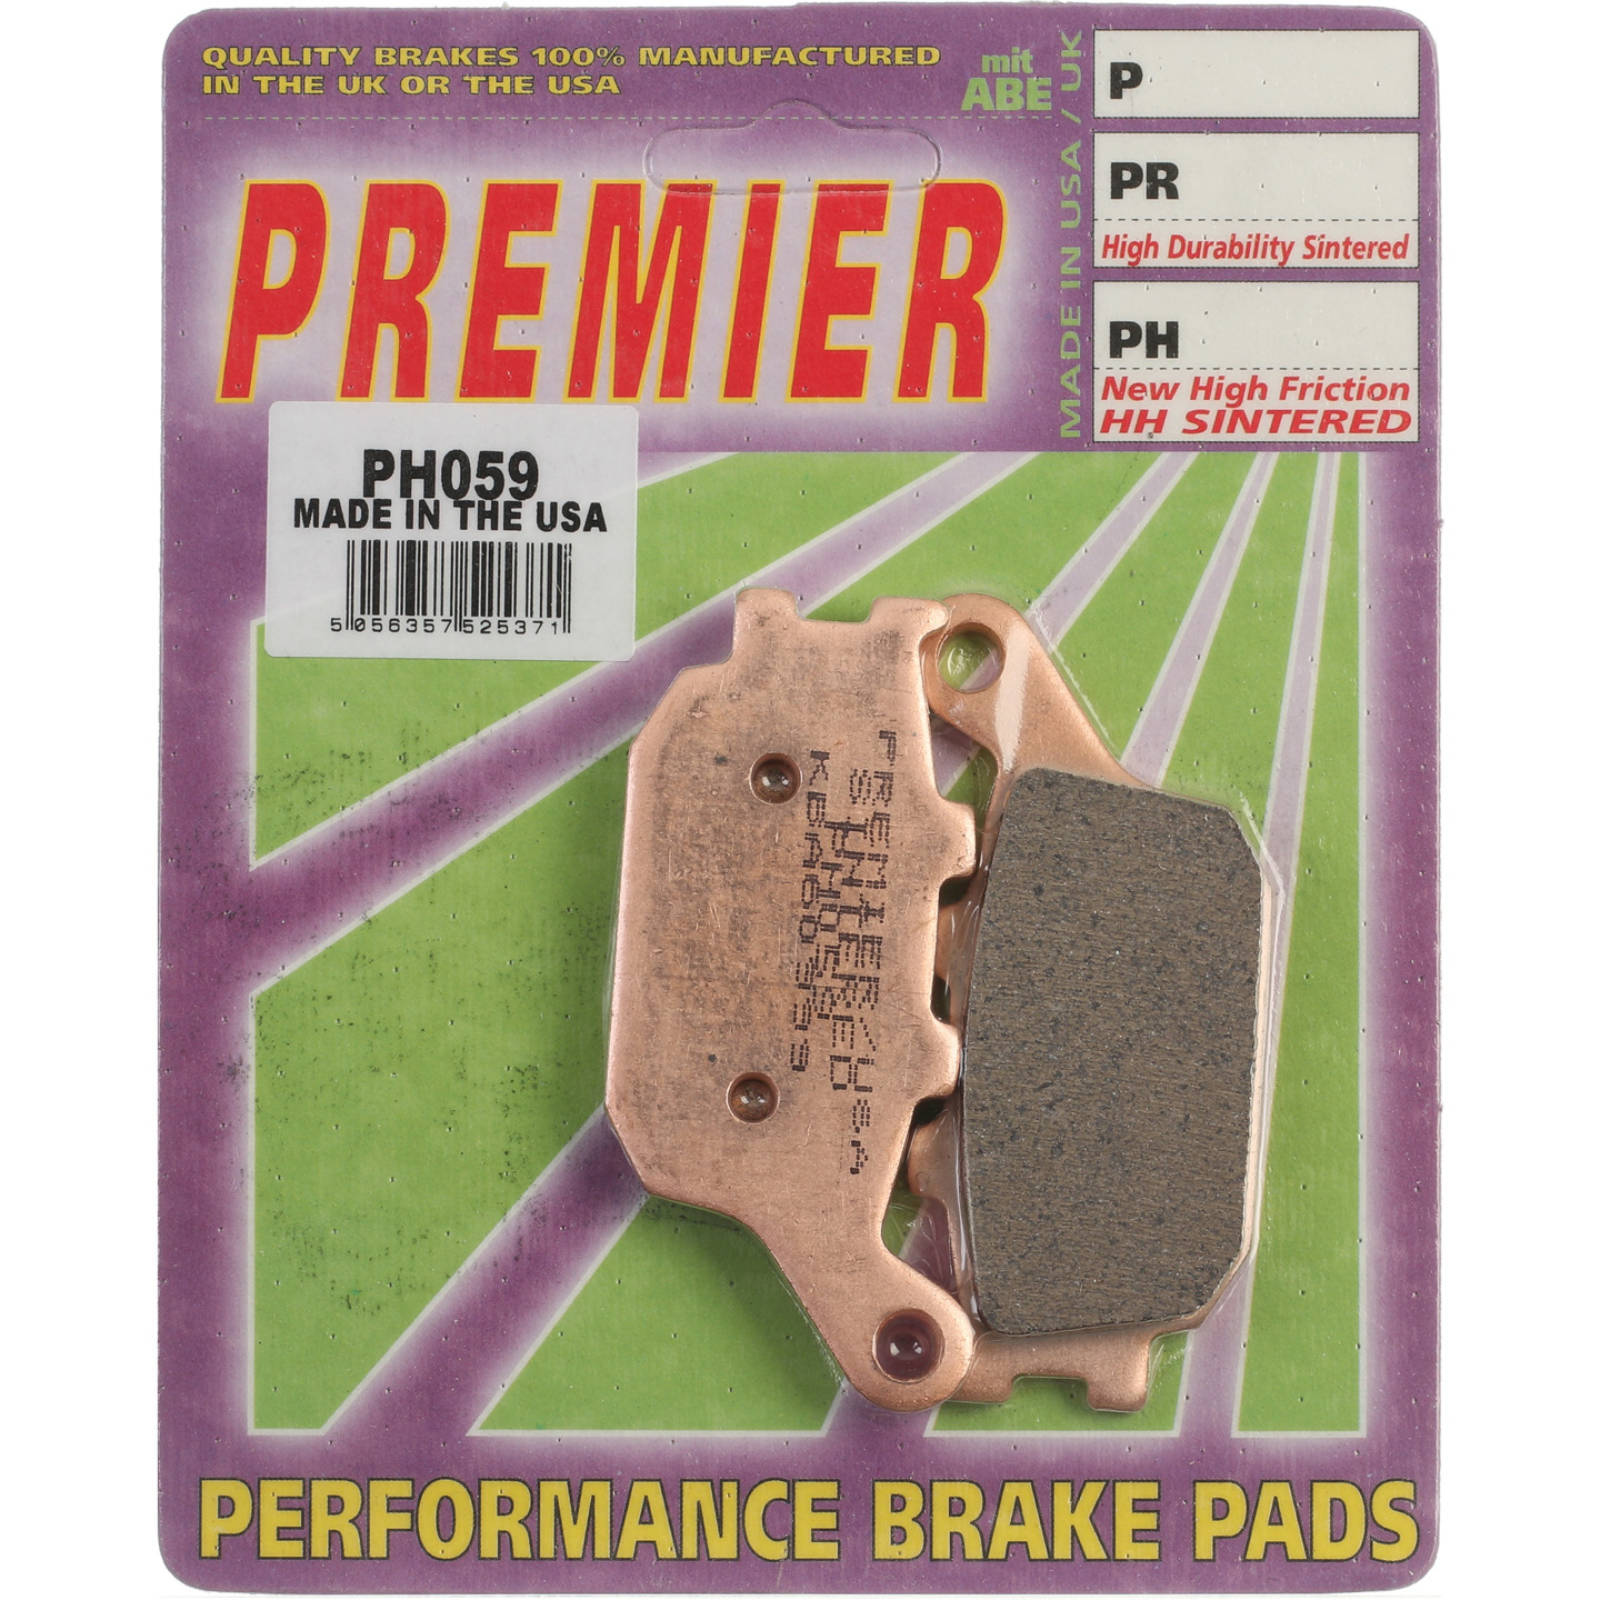 New PREMIER Brake Pad - PH Street Sintered (GF021S3) #PBPH59